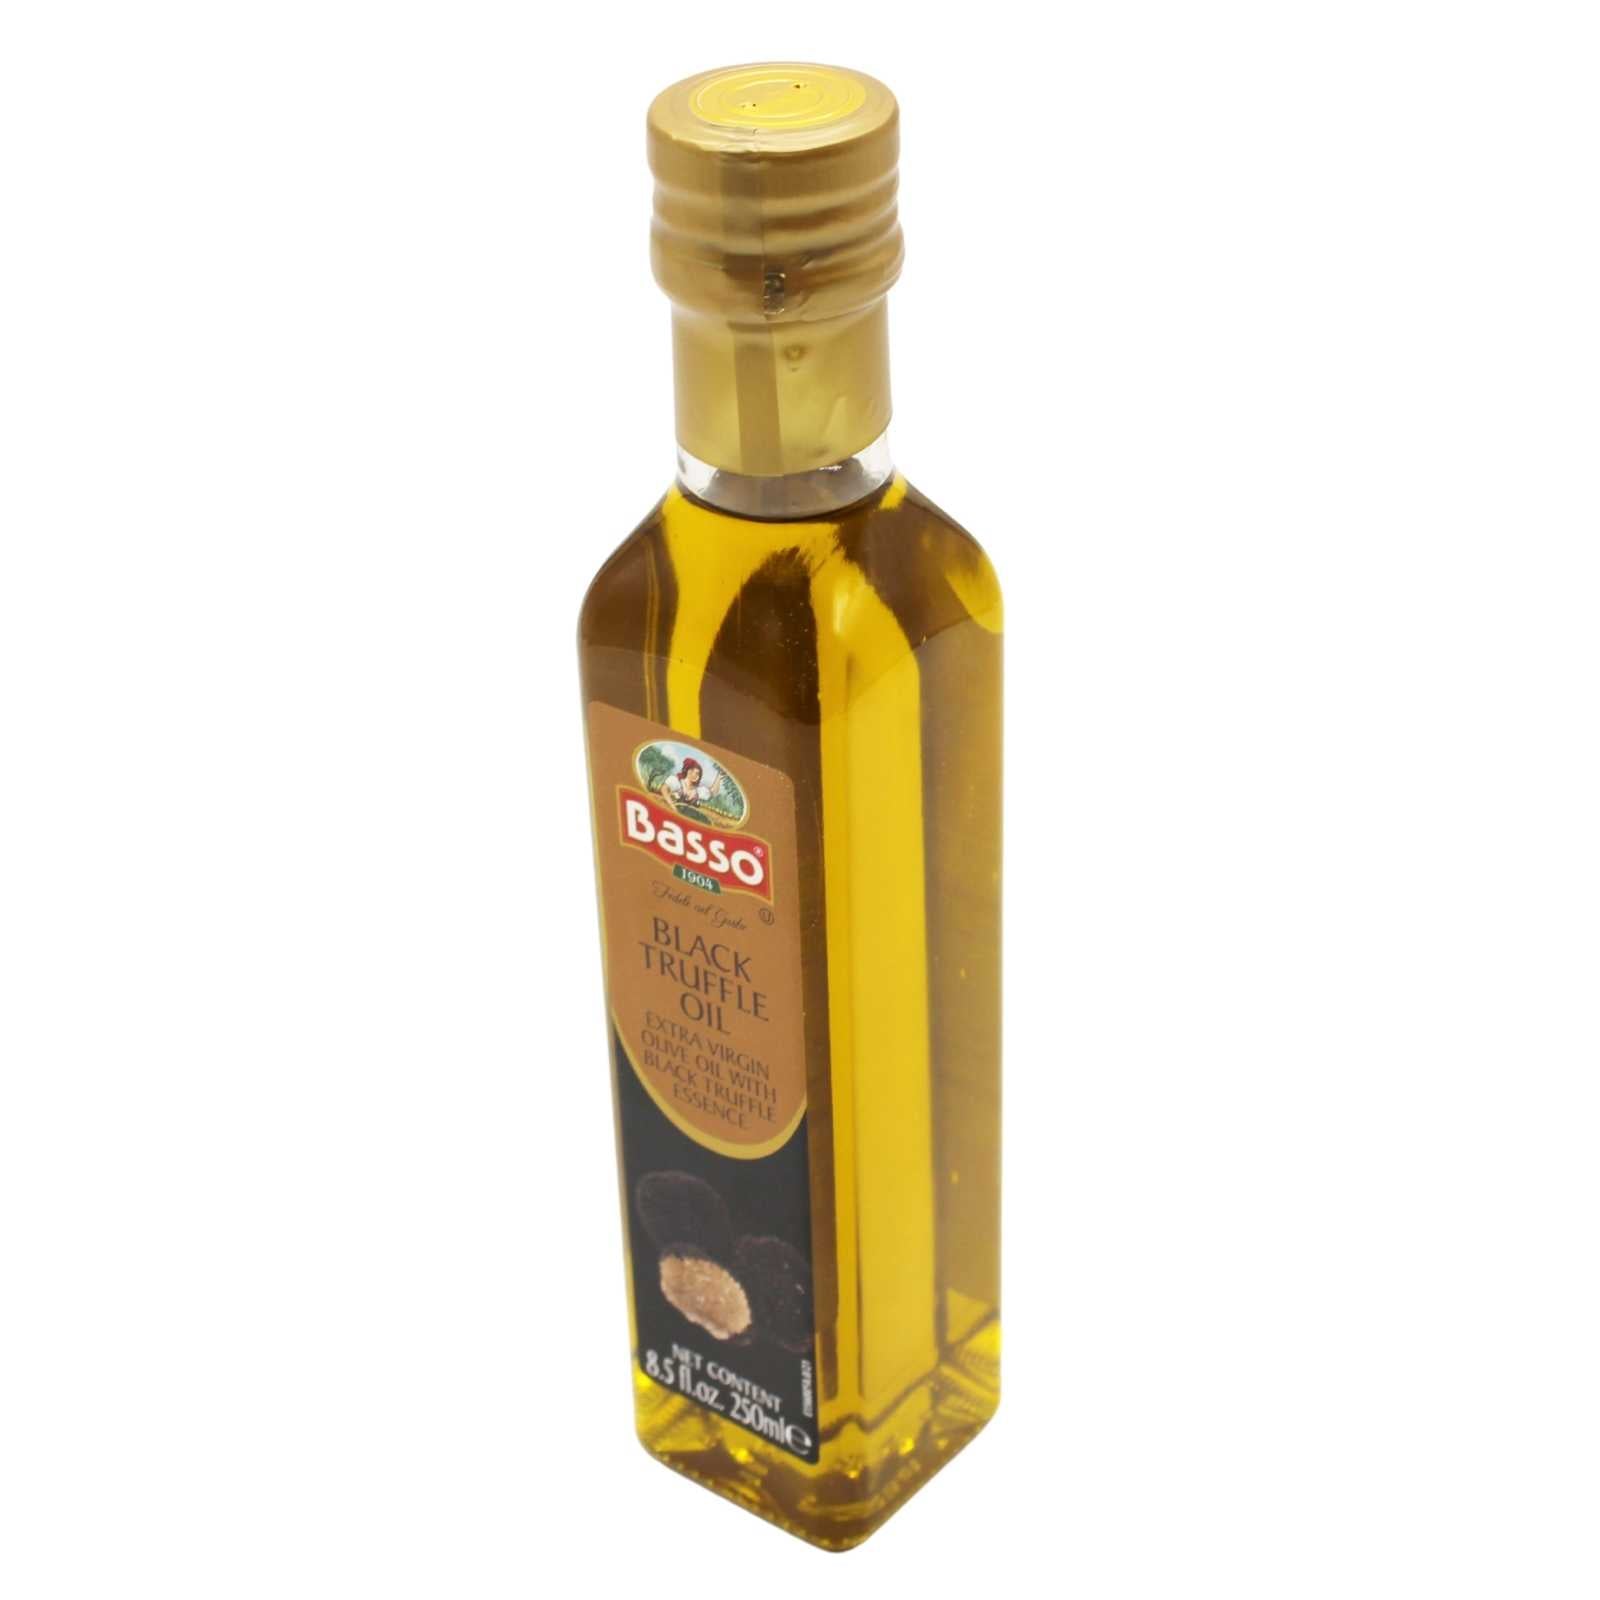 Basso Black Truffle Extra Virgin Olive Oil |  8.5oz (250 ml) top angle